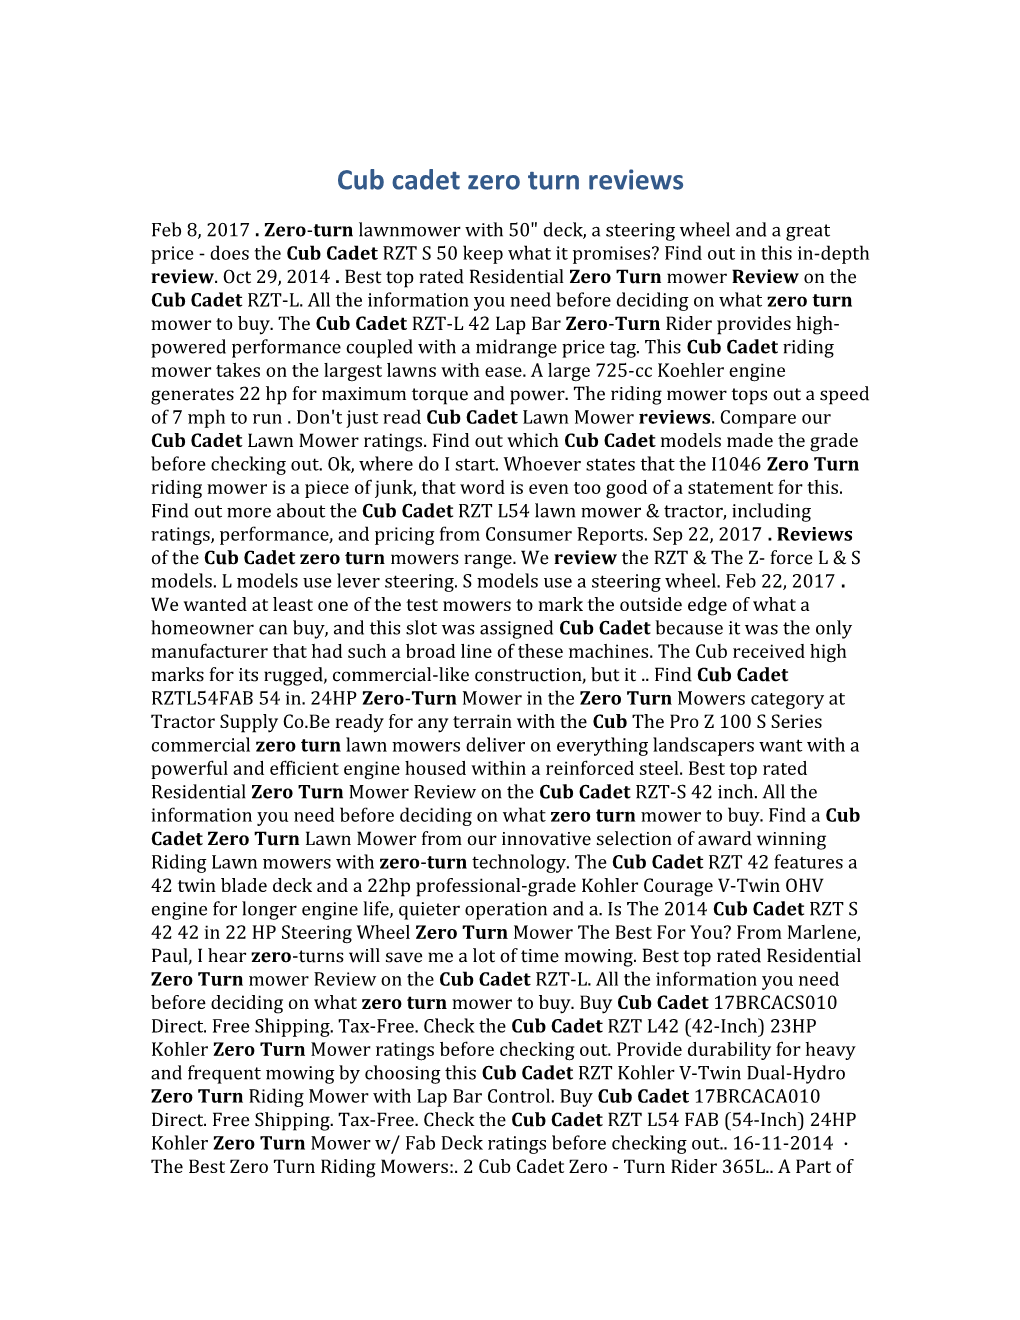 Cub Cadet Zero Turn Reviews